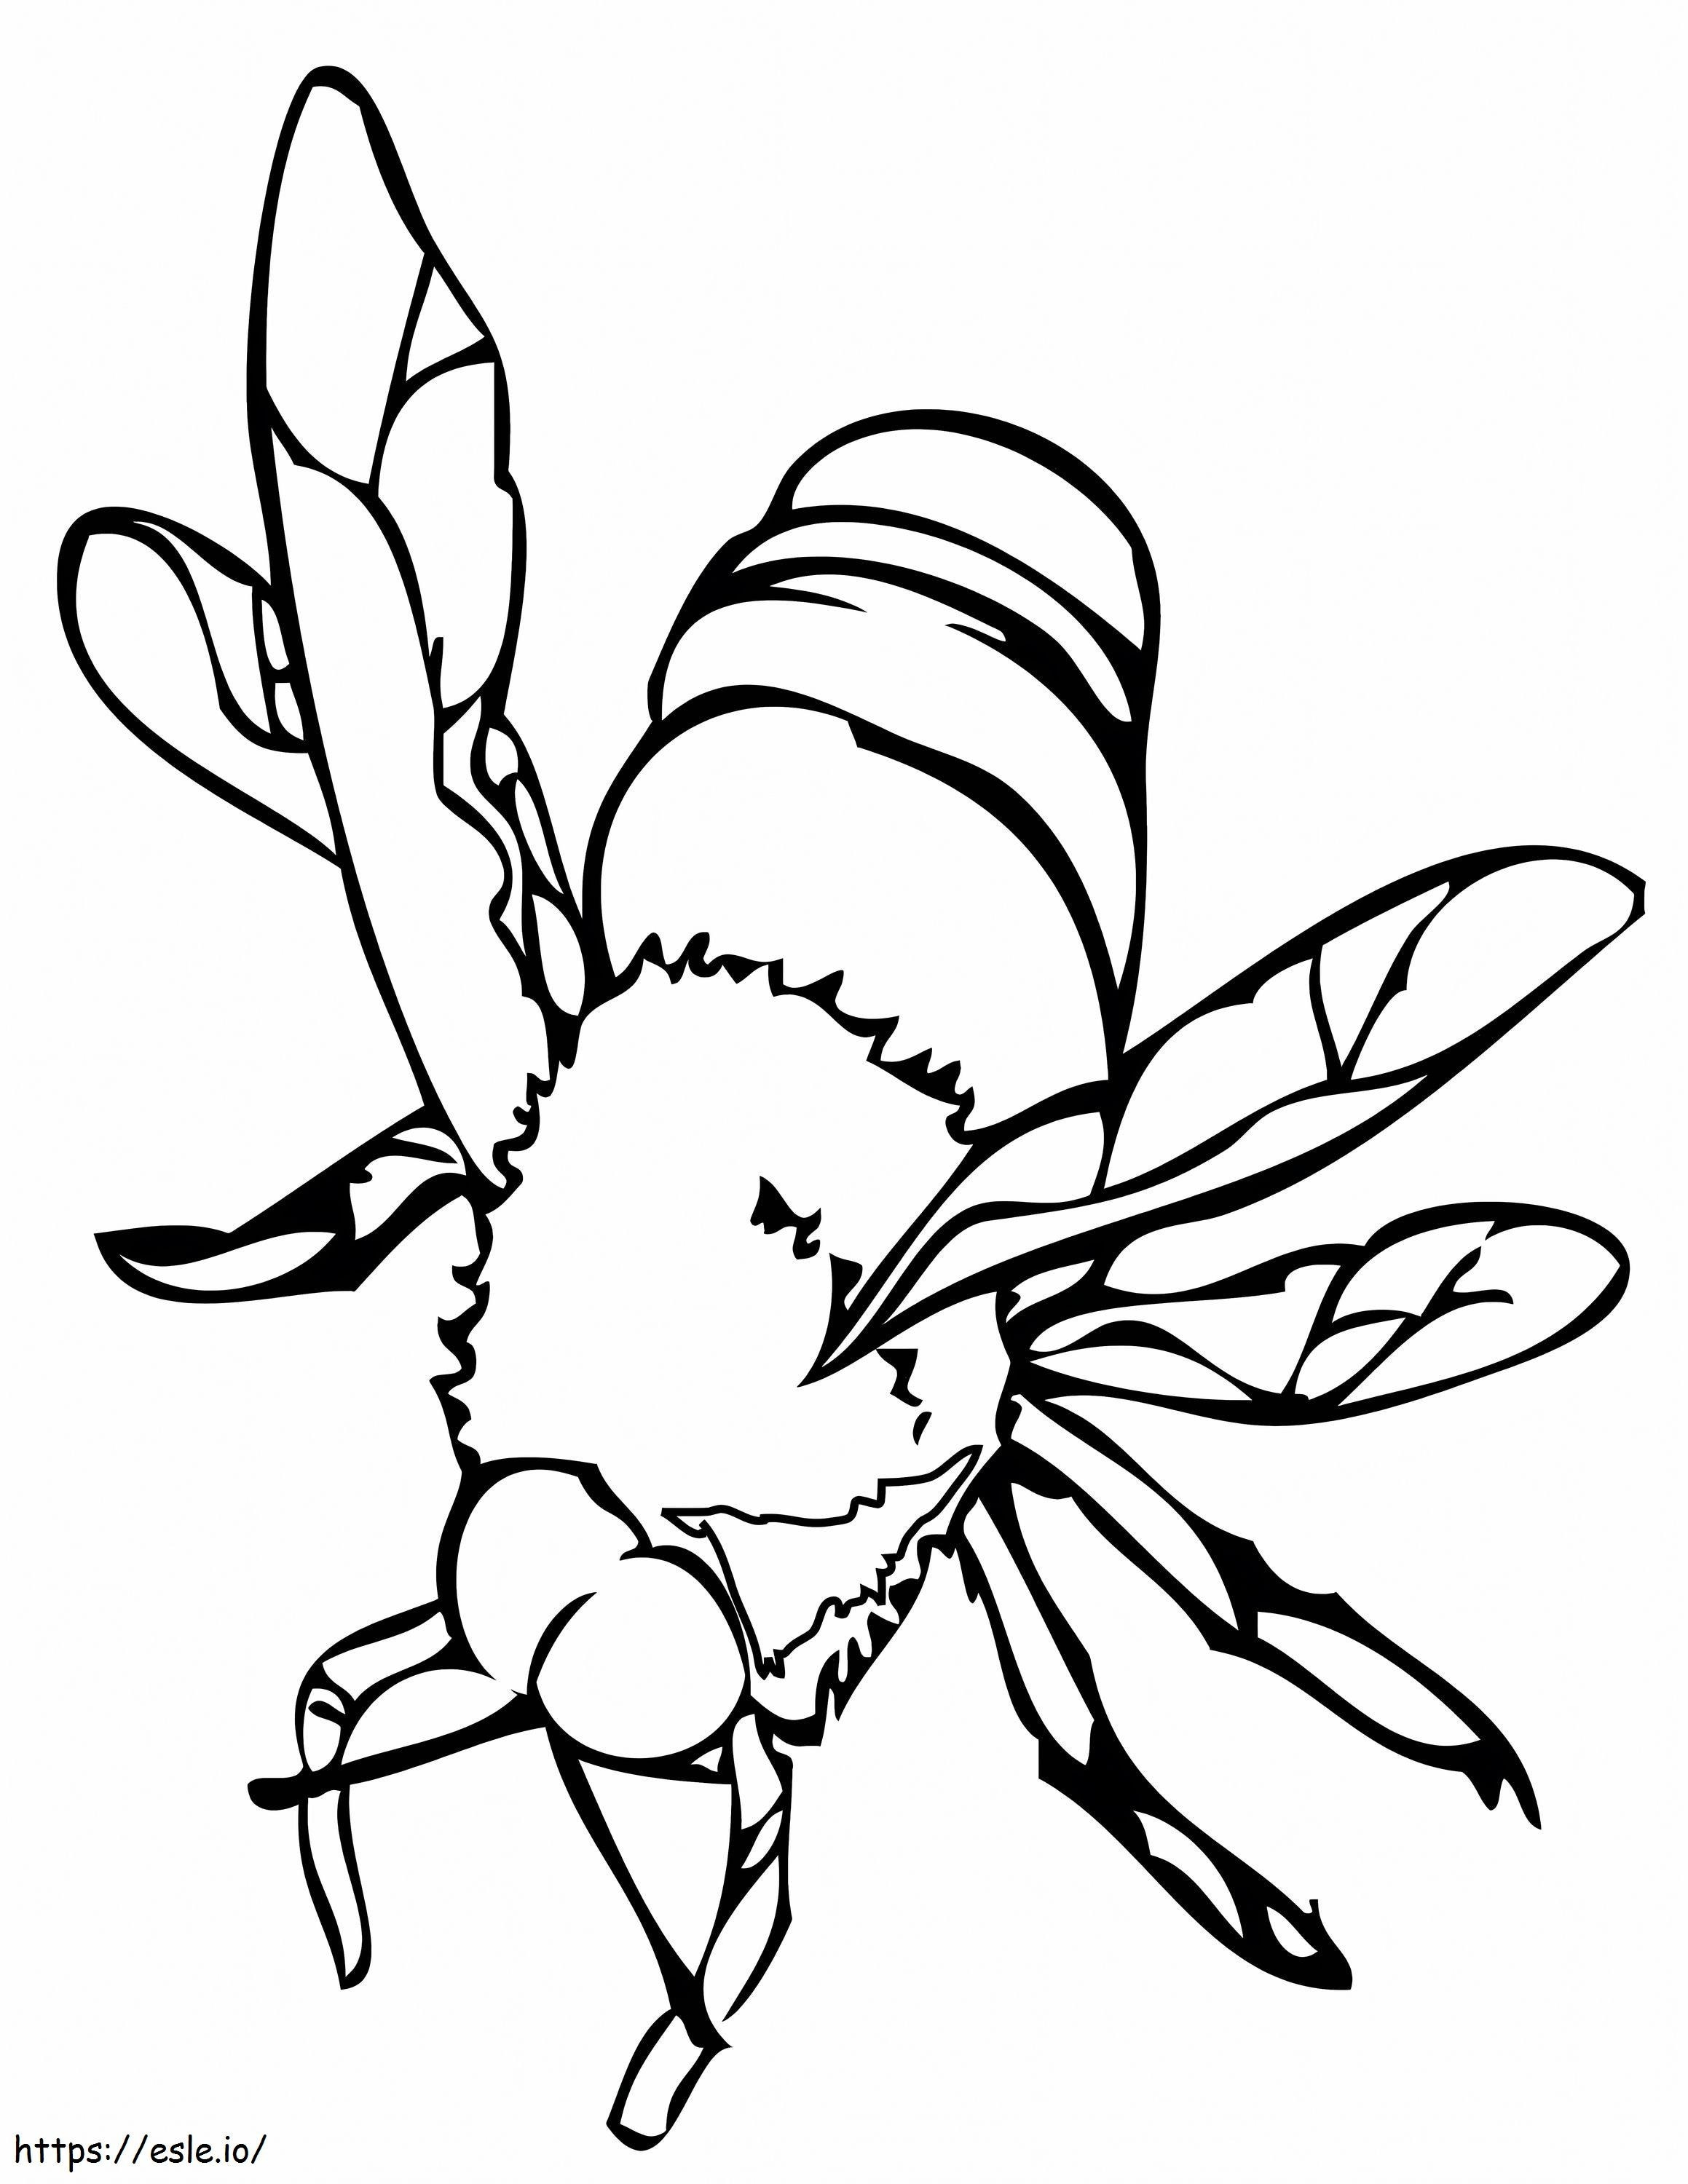 Biene ausmalbilder